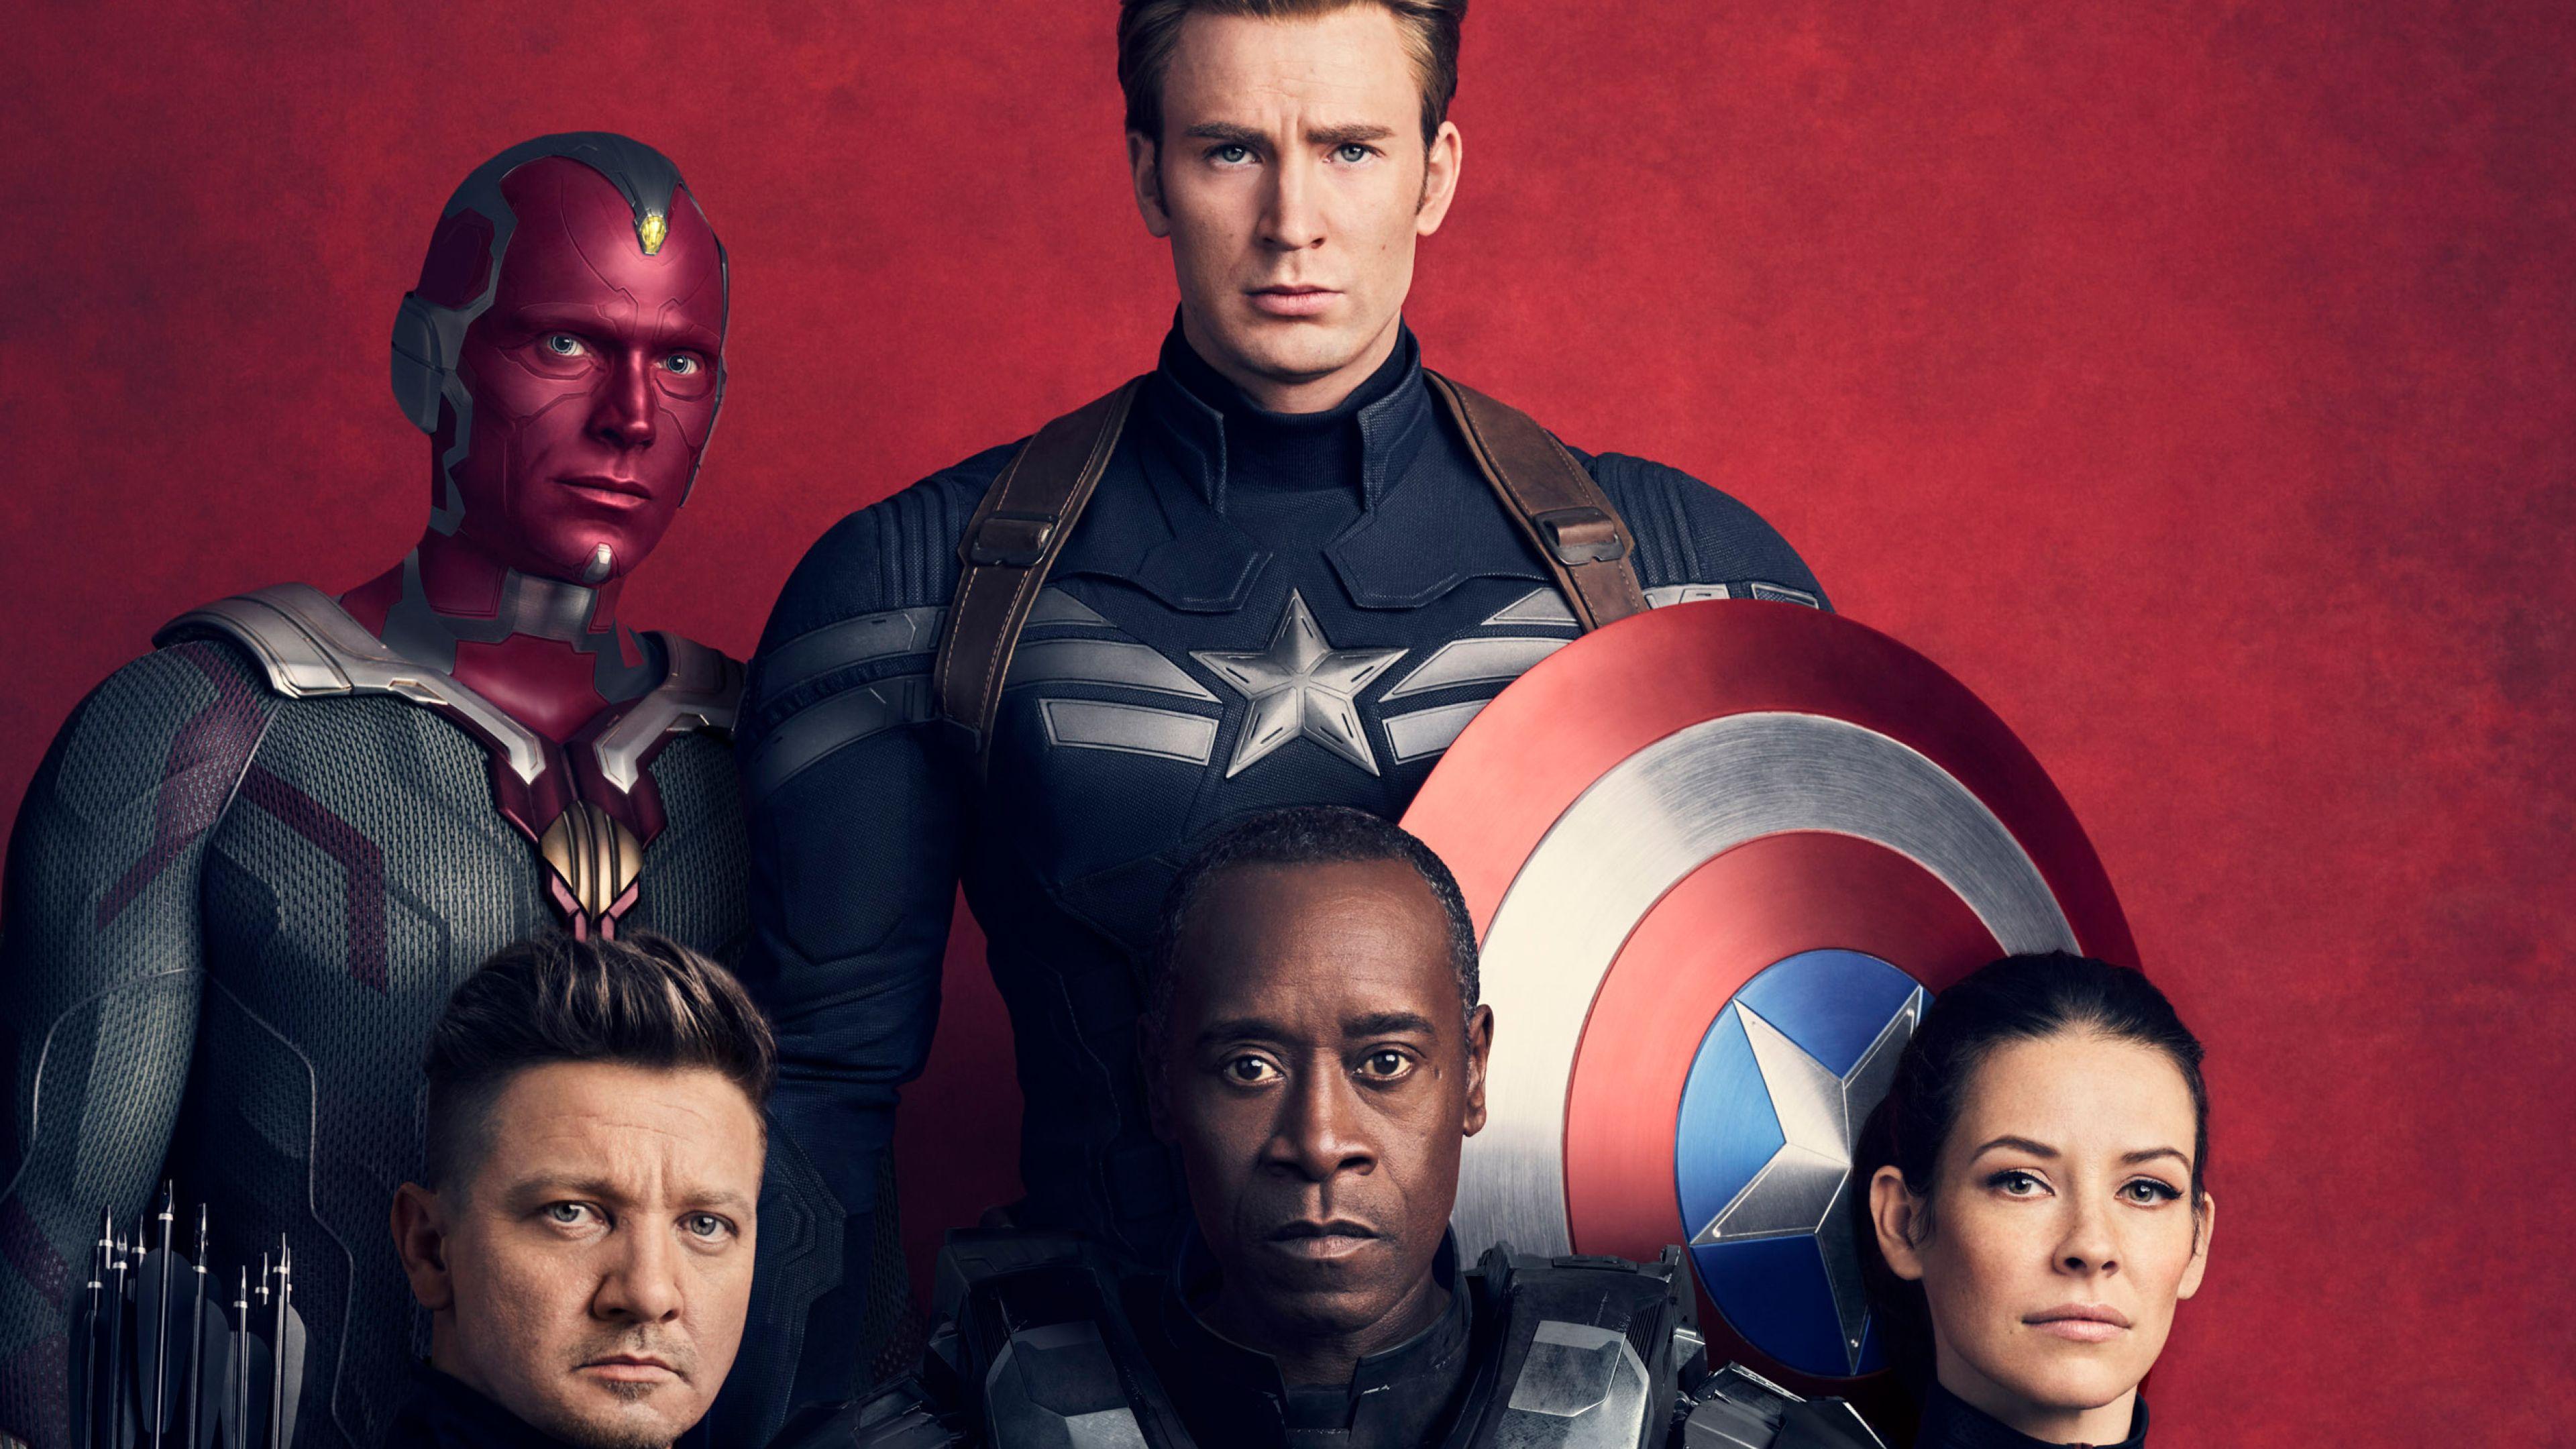 Avengers: Infinity War (2018) 4K UHD 16:9 3840x2160 Wallpaper. UHD